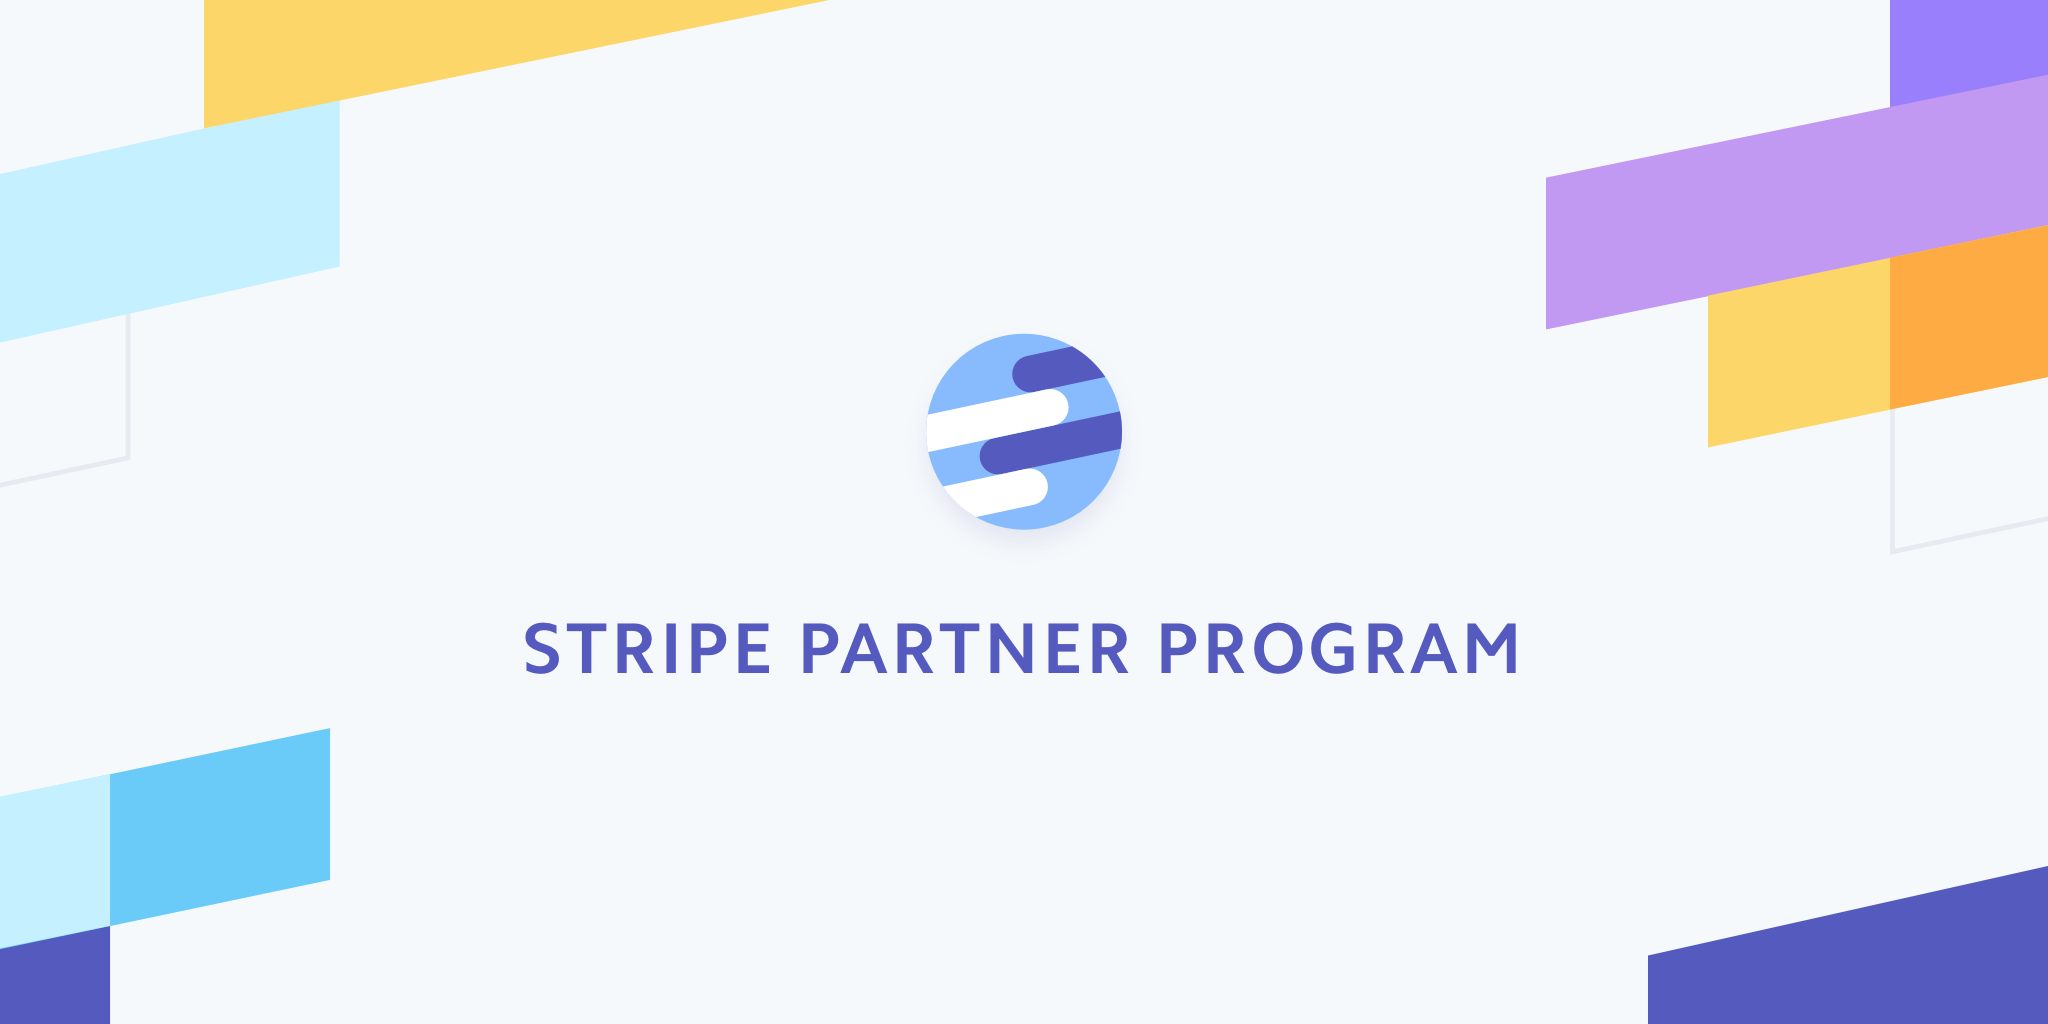 Stripe launches partner programme